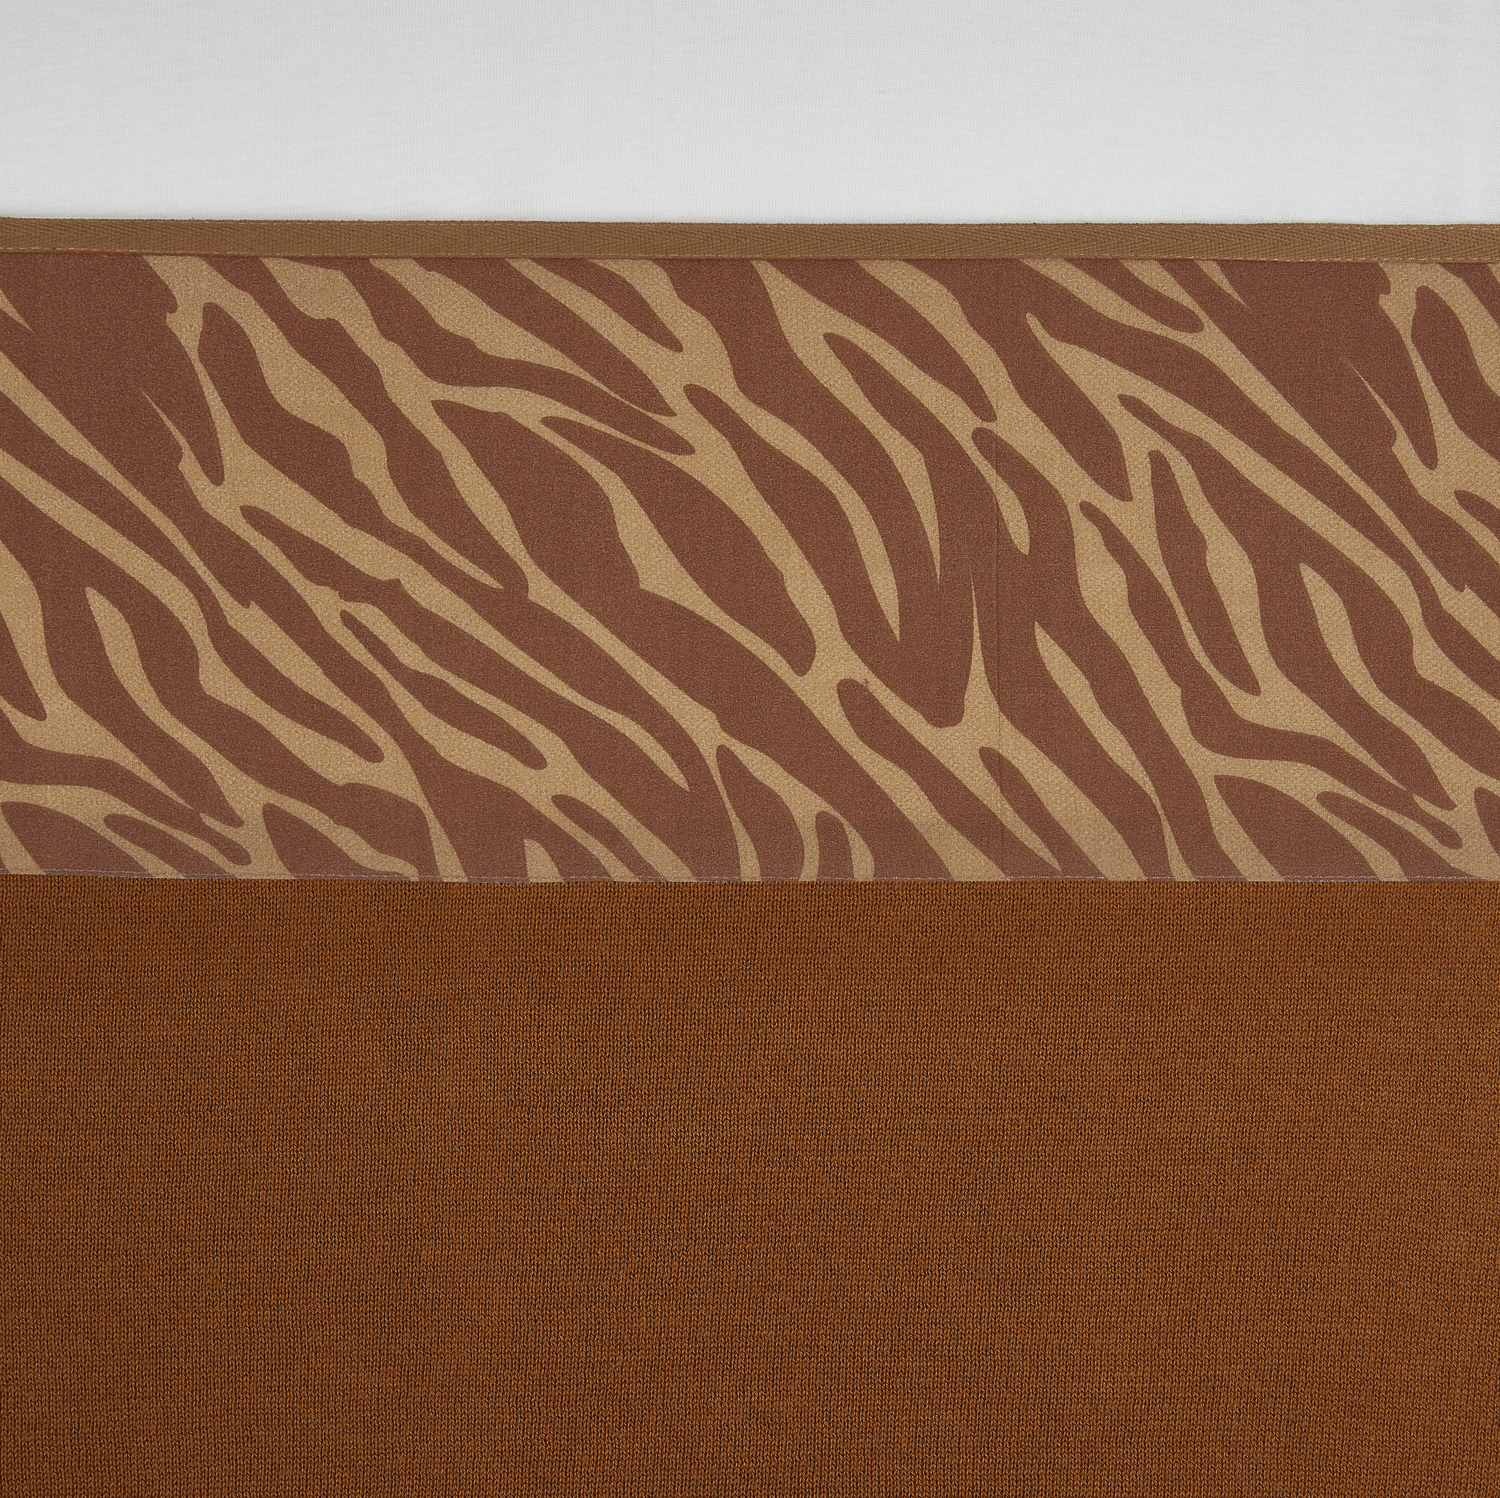 Cot Bed Sheet Zebra - Camel - 100X150cm